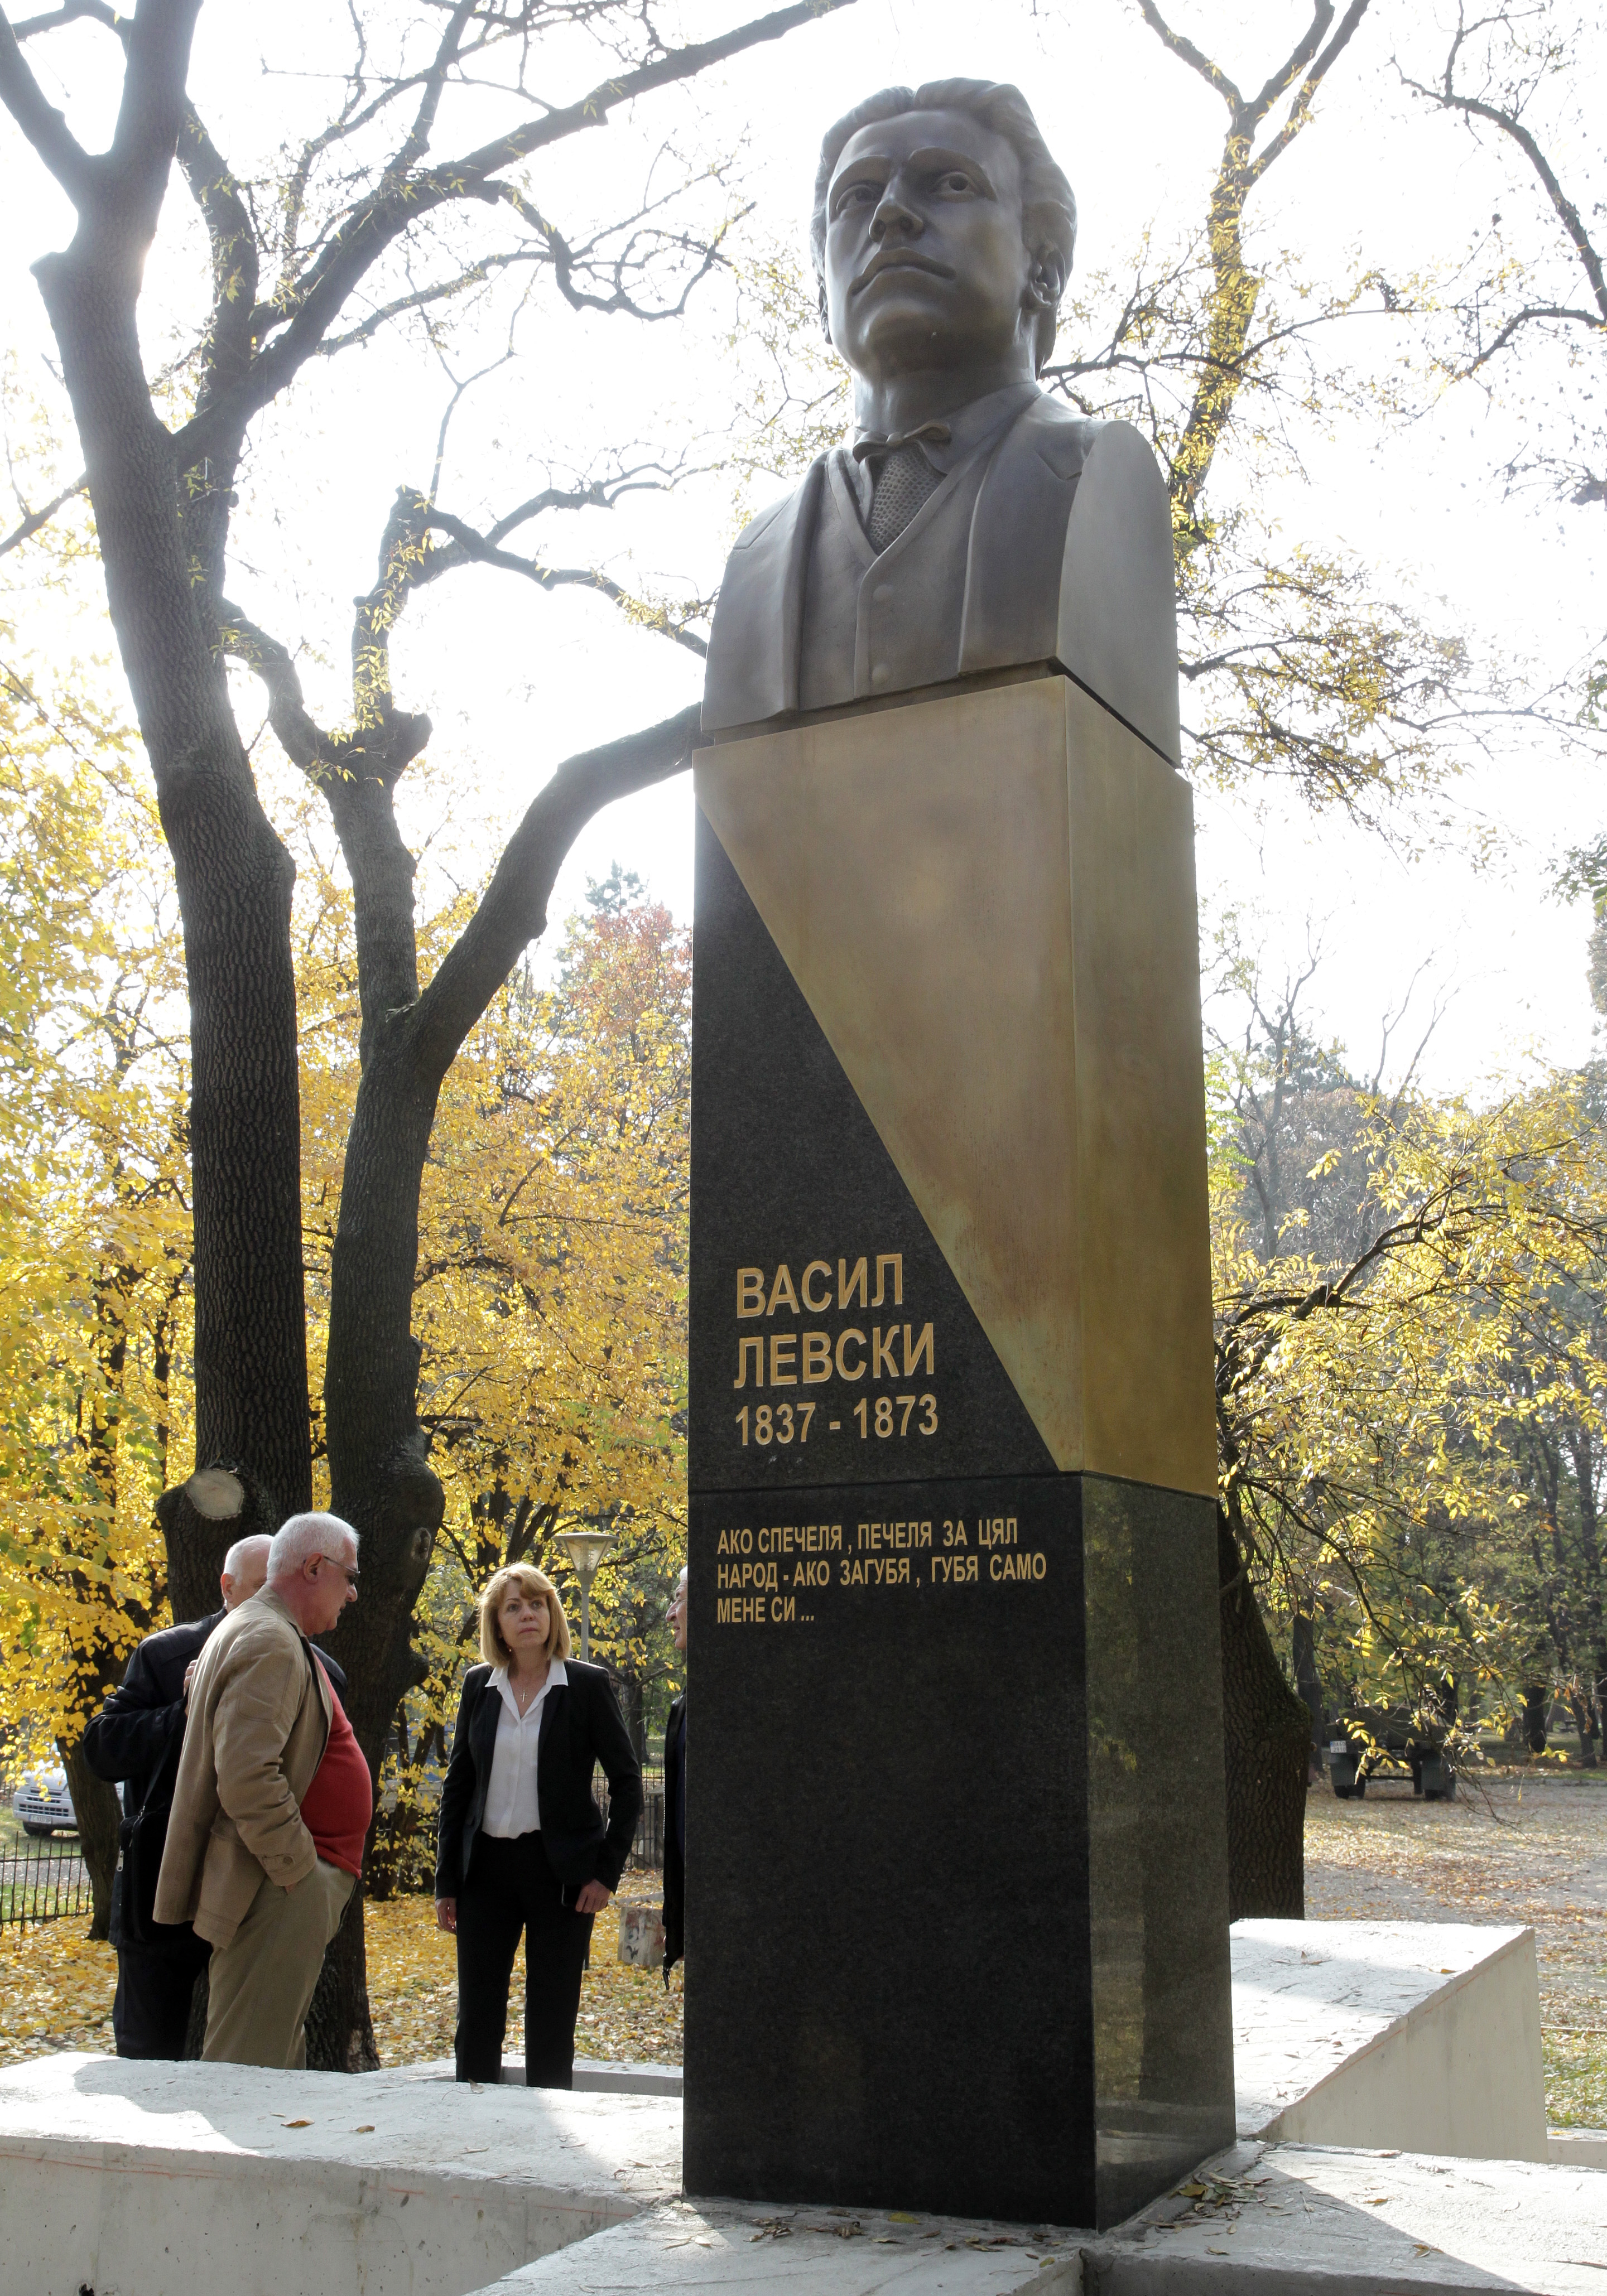 Бюст-паметникът е дело на скулптора Красимир Ангелов и архитекта Венцислав Йочколовски